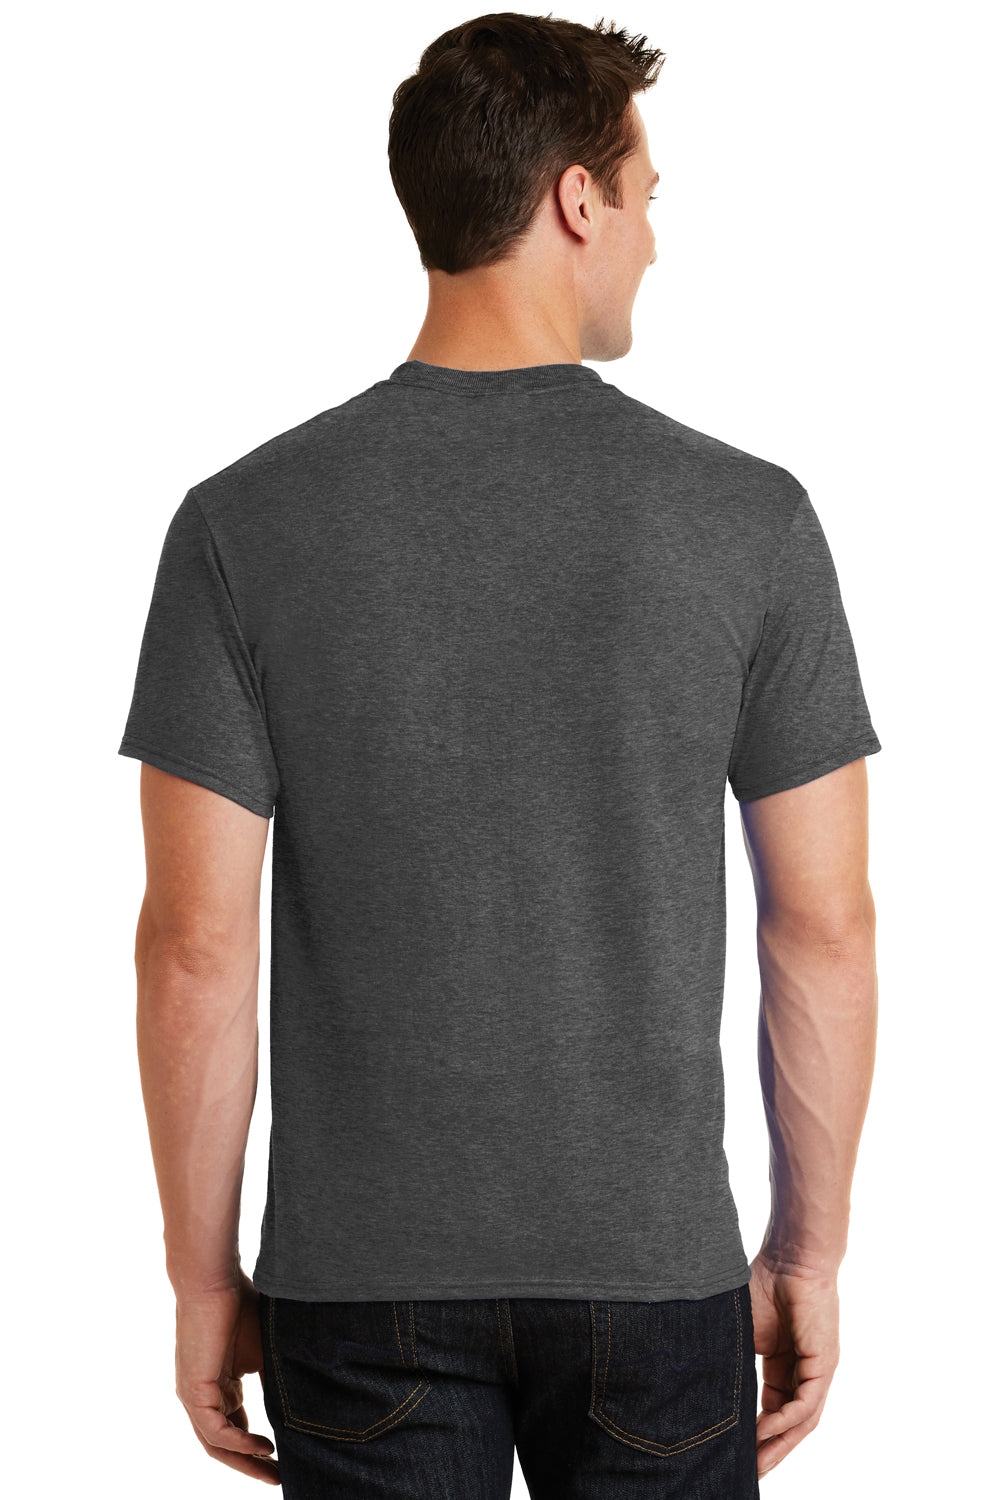 Port & Company PC55 Mens Core Short Sleeve Crewneck T-Shirt Heather Dark Grey Back